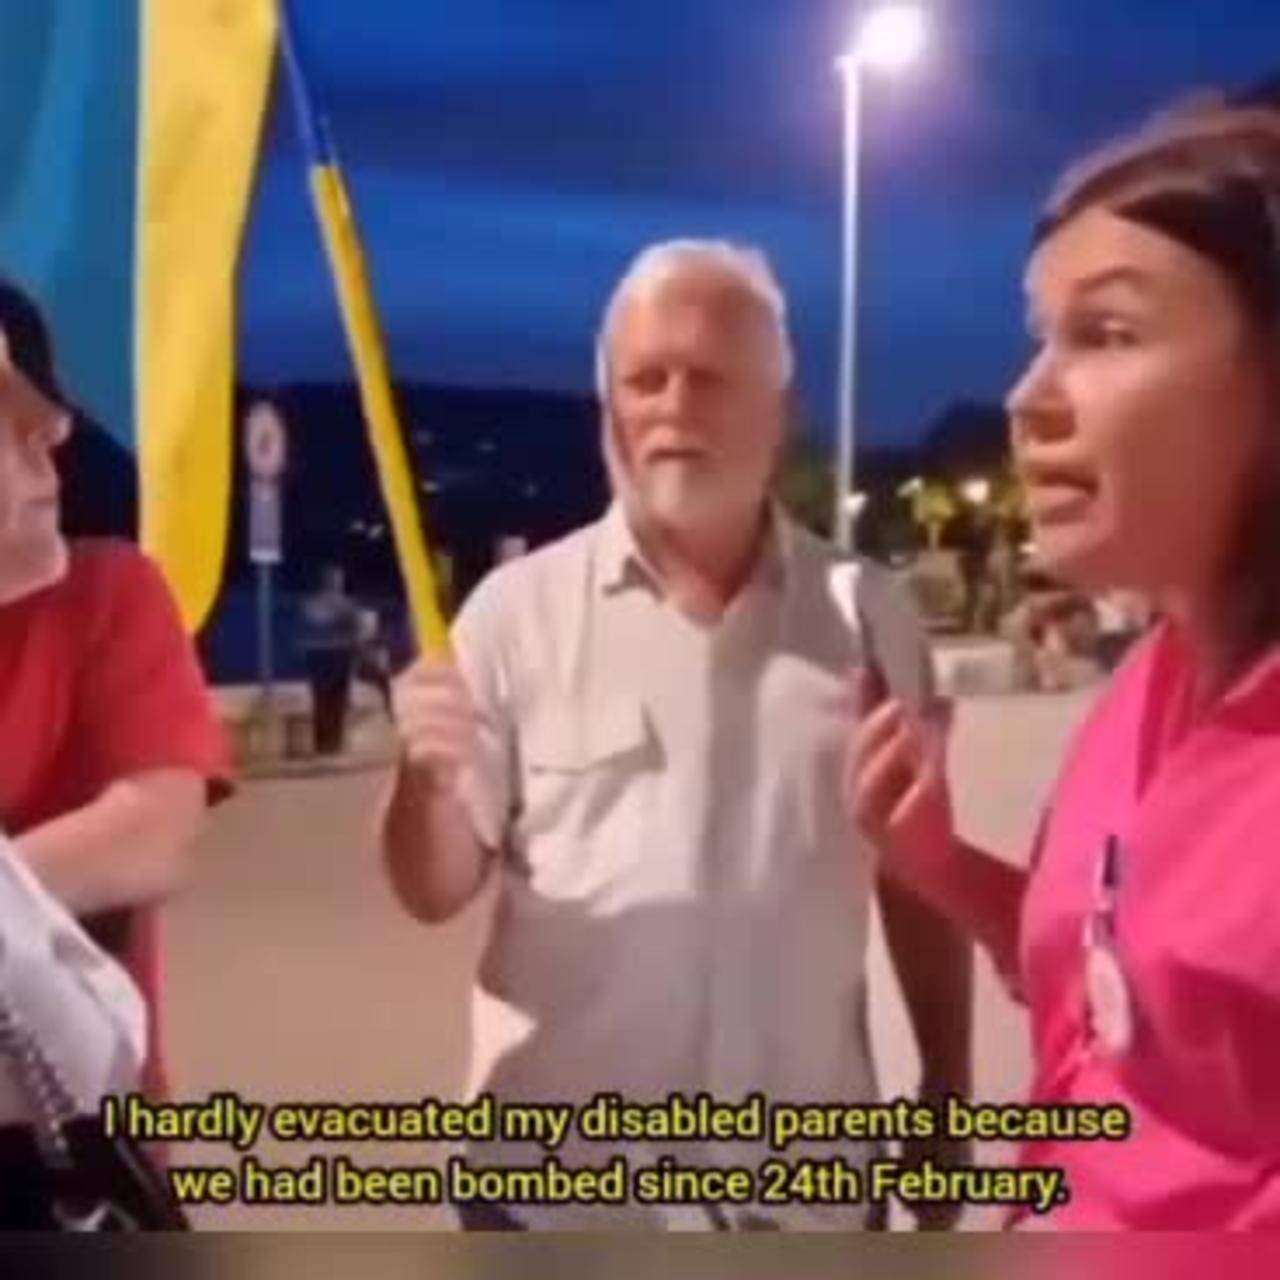 In Spain an argument broke out between Ukrainian refugees.